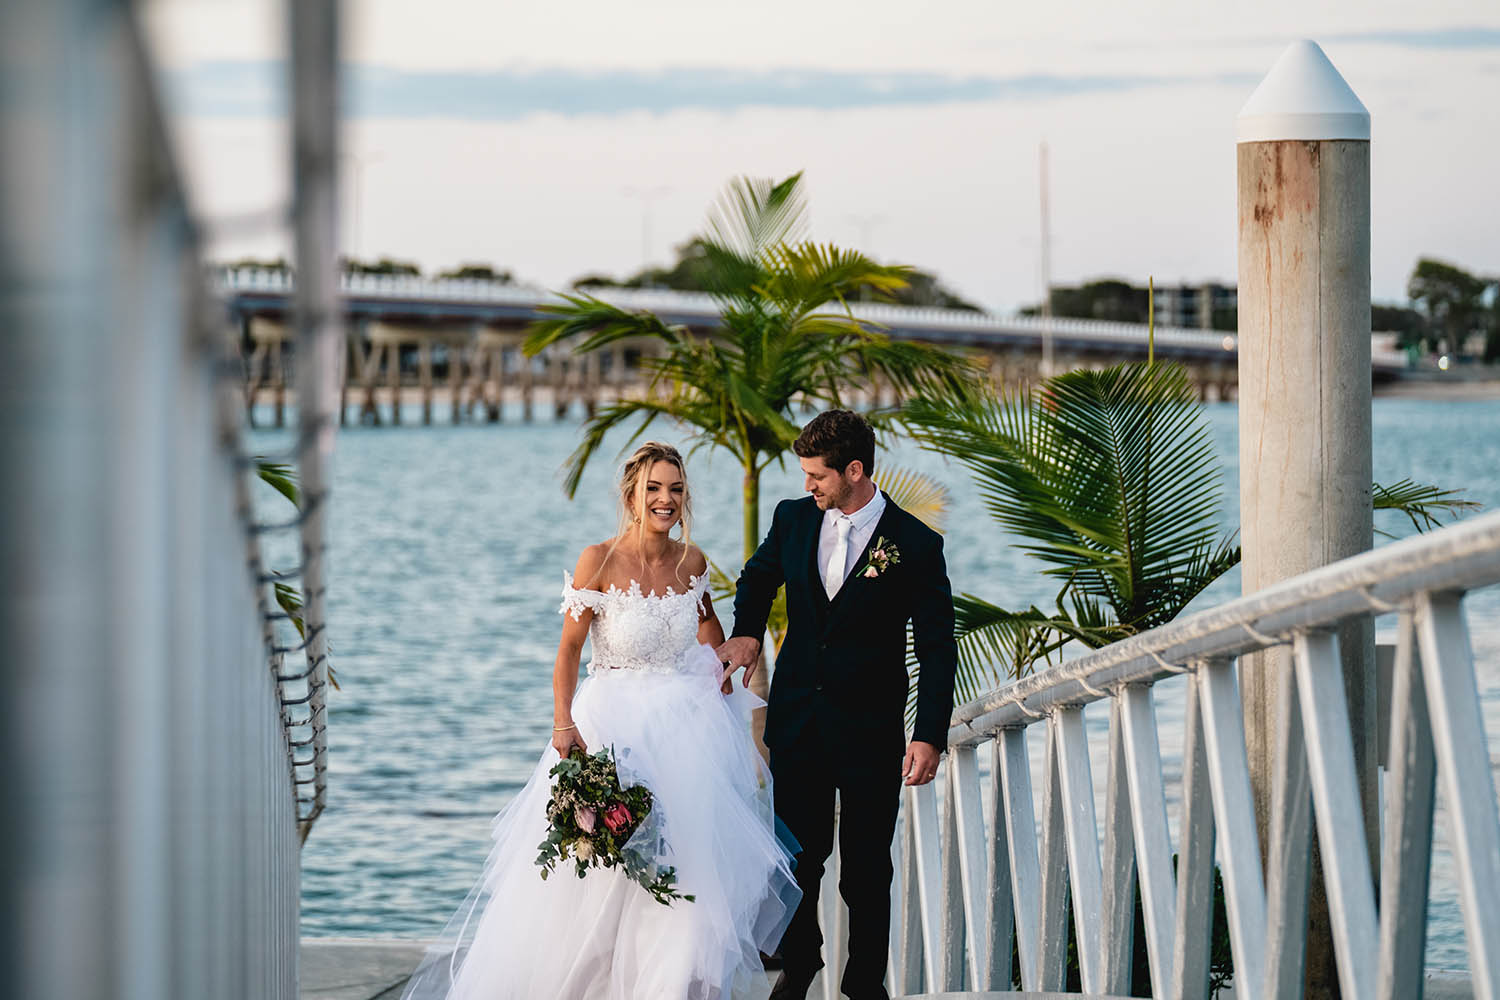 Wedding Photography - Couple on pier